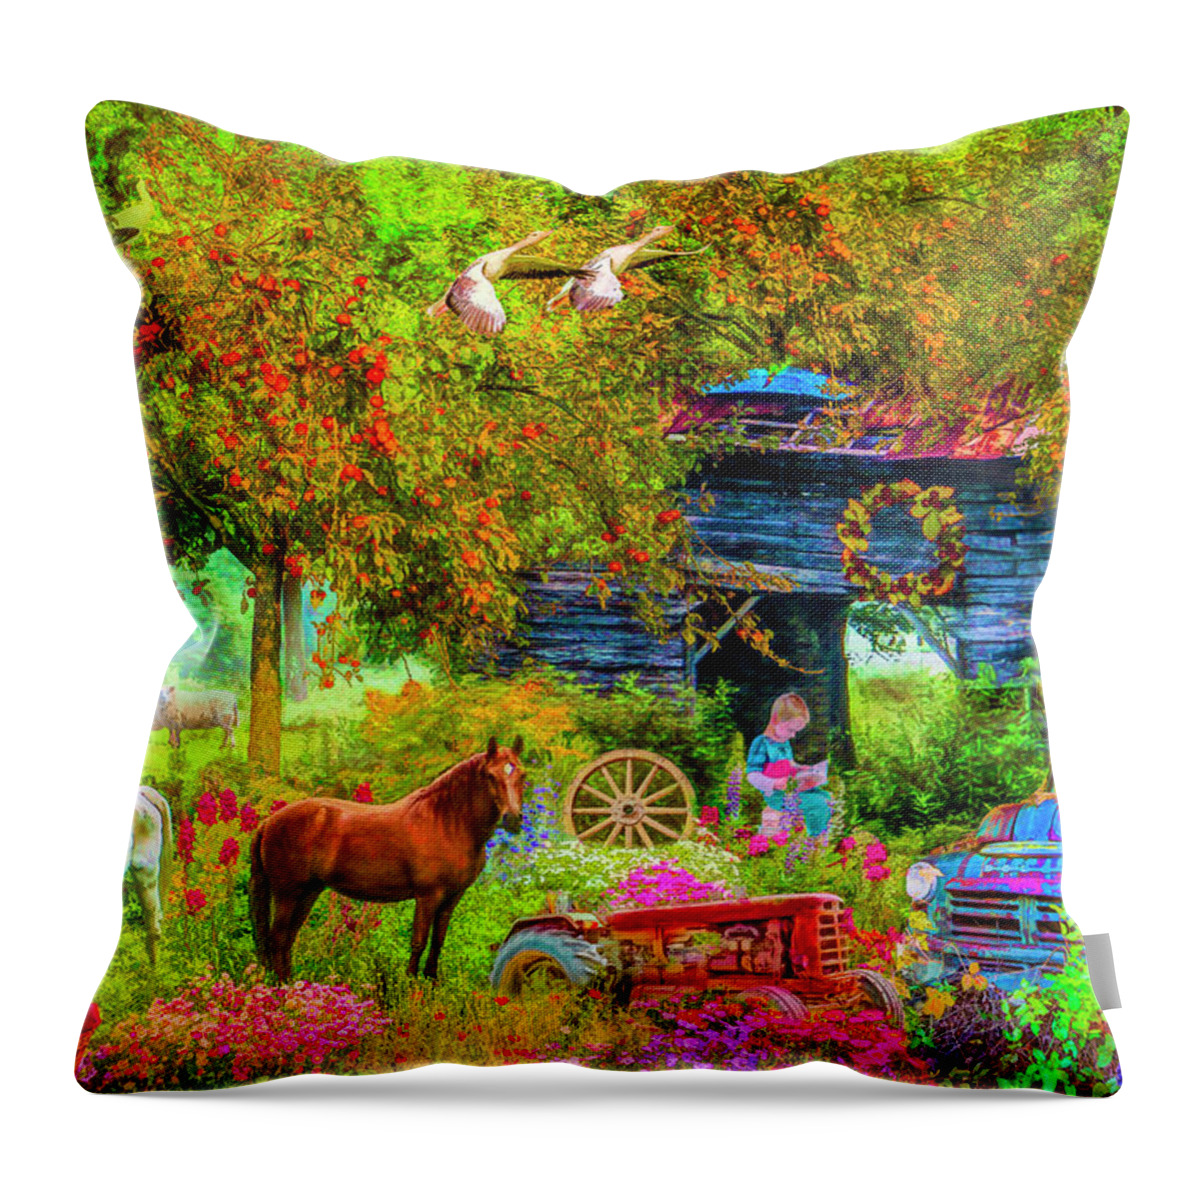 Barns Throw Pillow featuring the digital art Autumn Garden on the Farm by Debra and Dave Vanderlaan